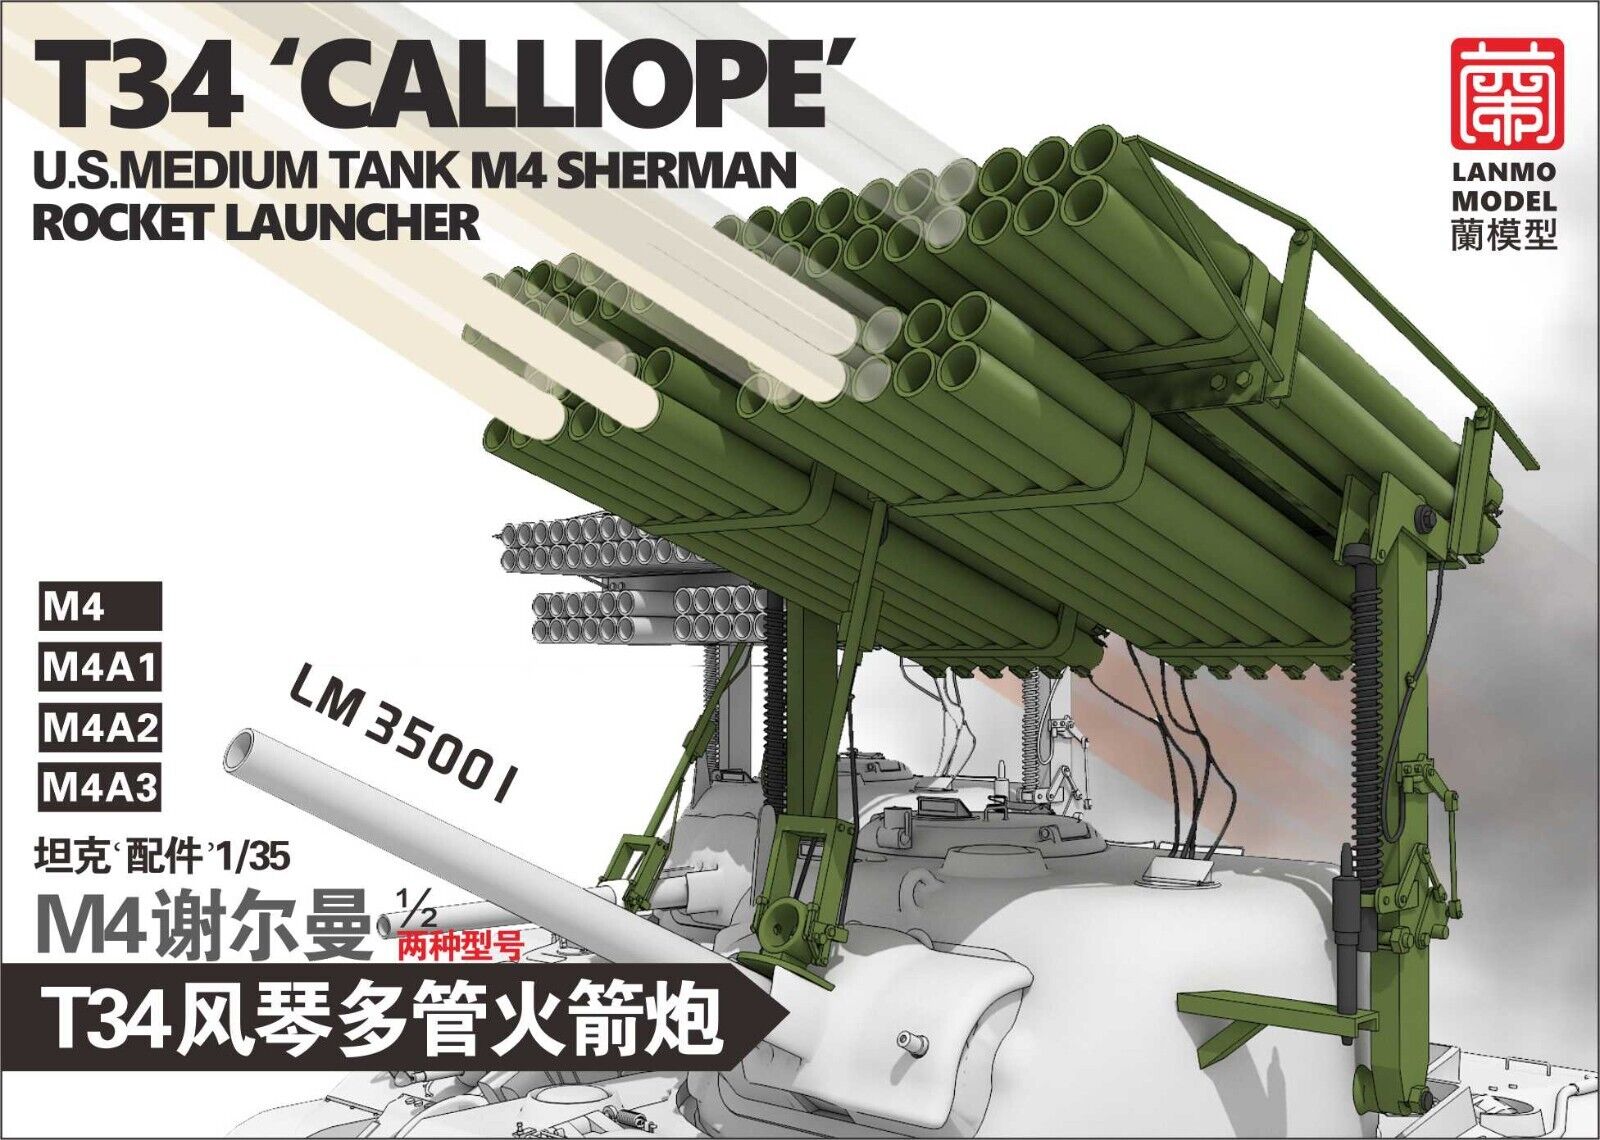 LM-35001  дополнения из металла  34 'Calliope' US medium tank M4 Sherman rocket launcher  (1:35)